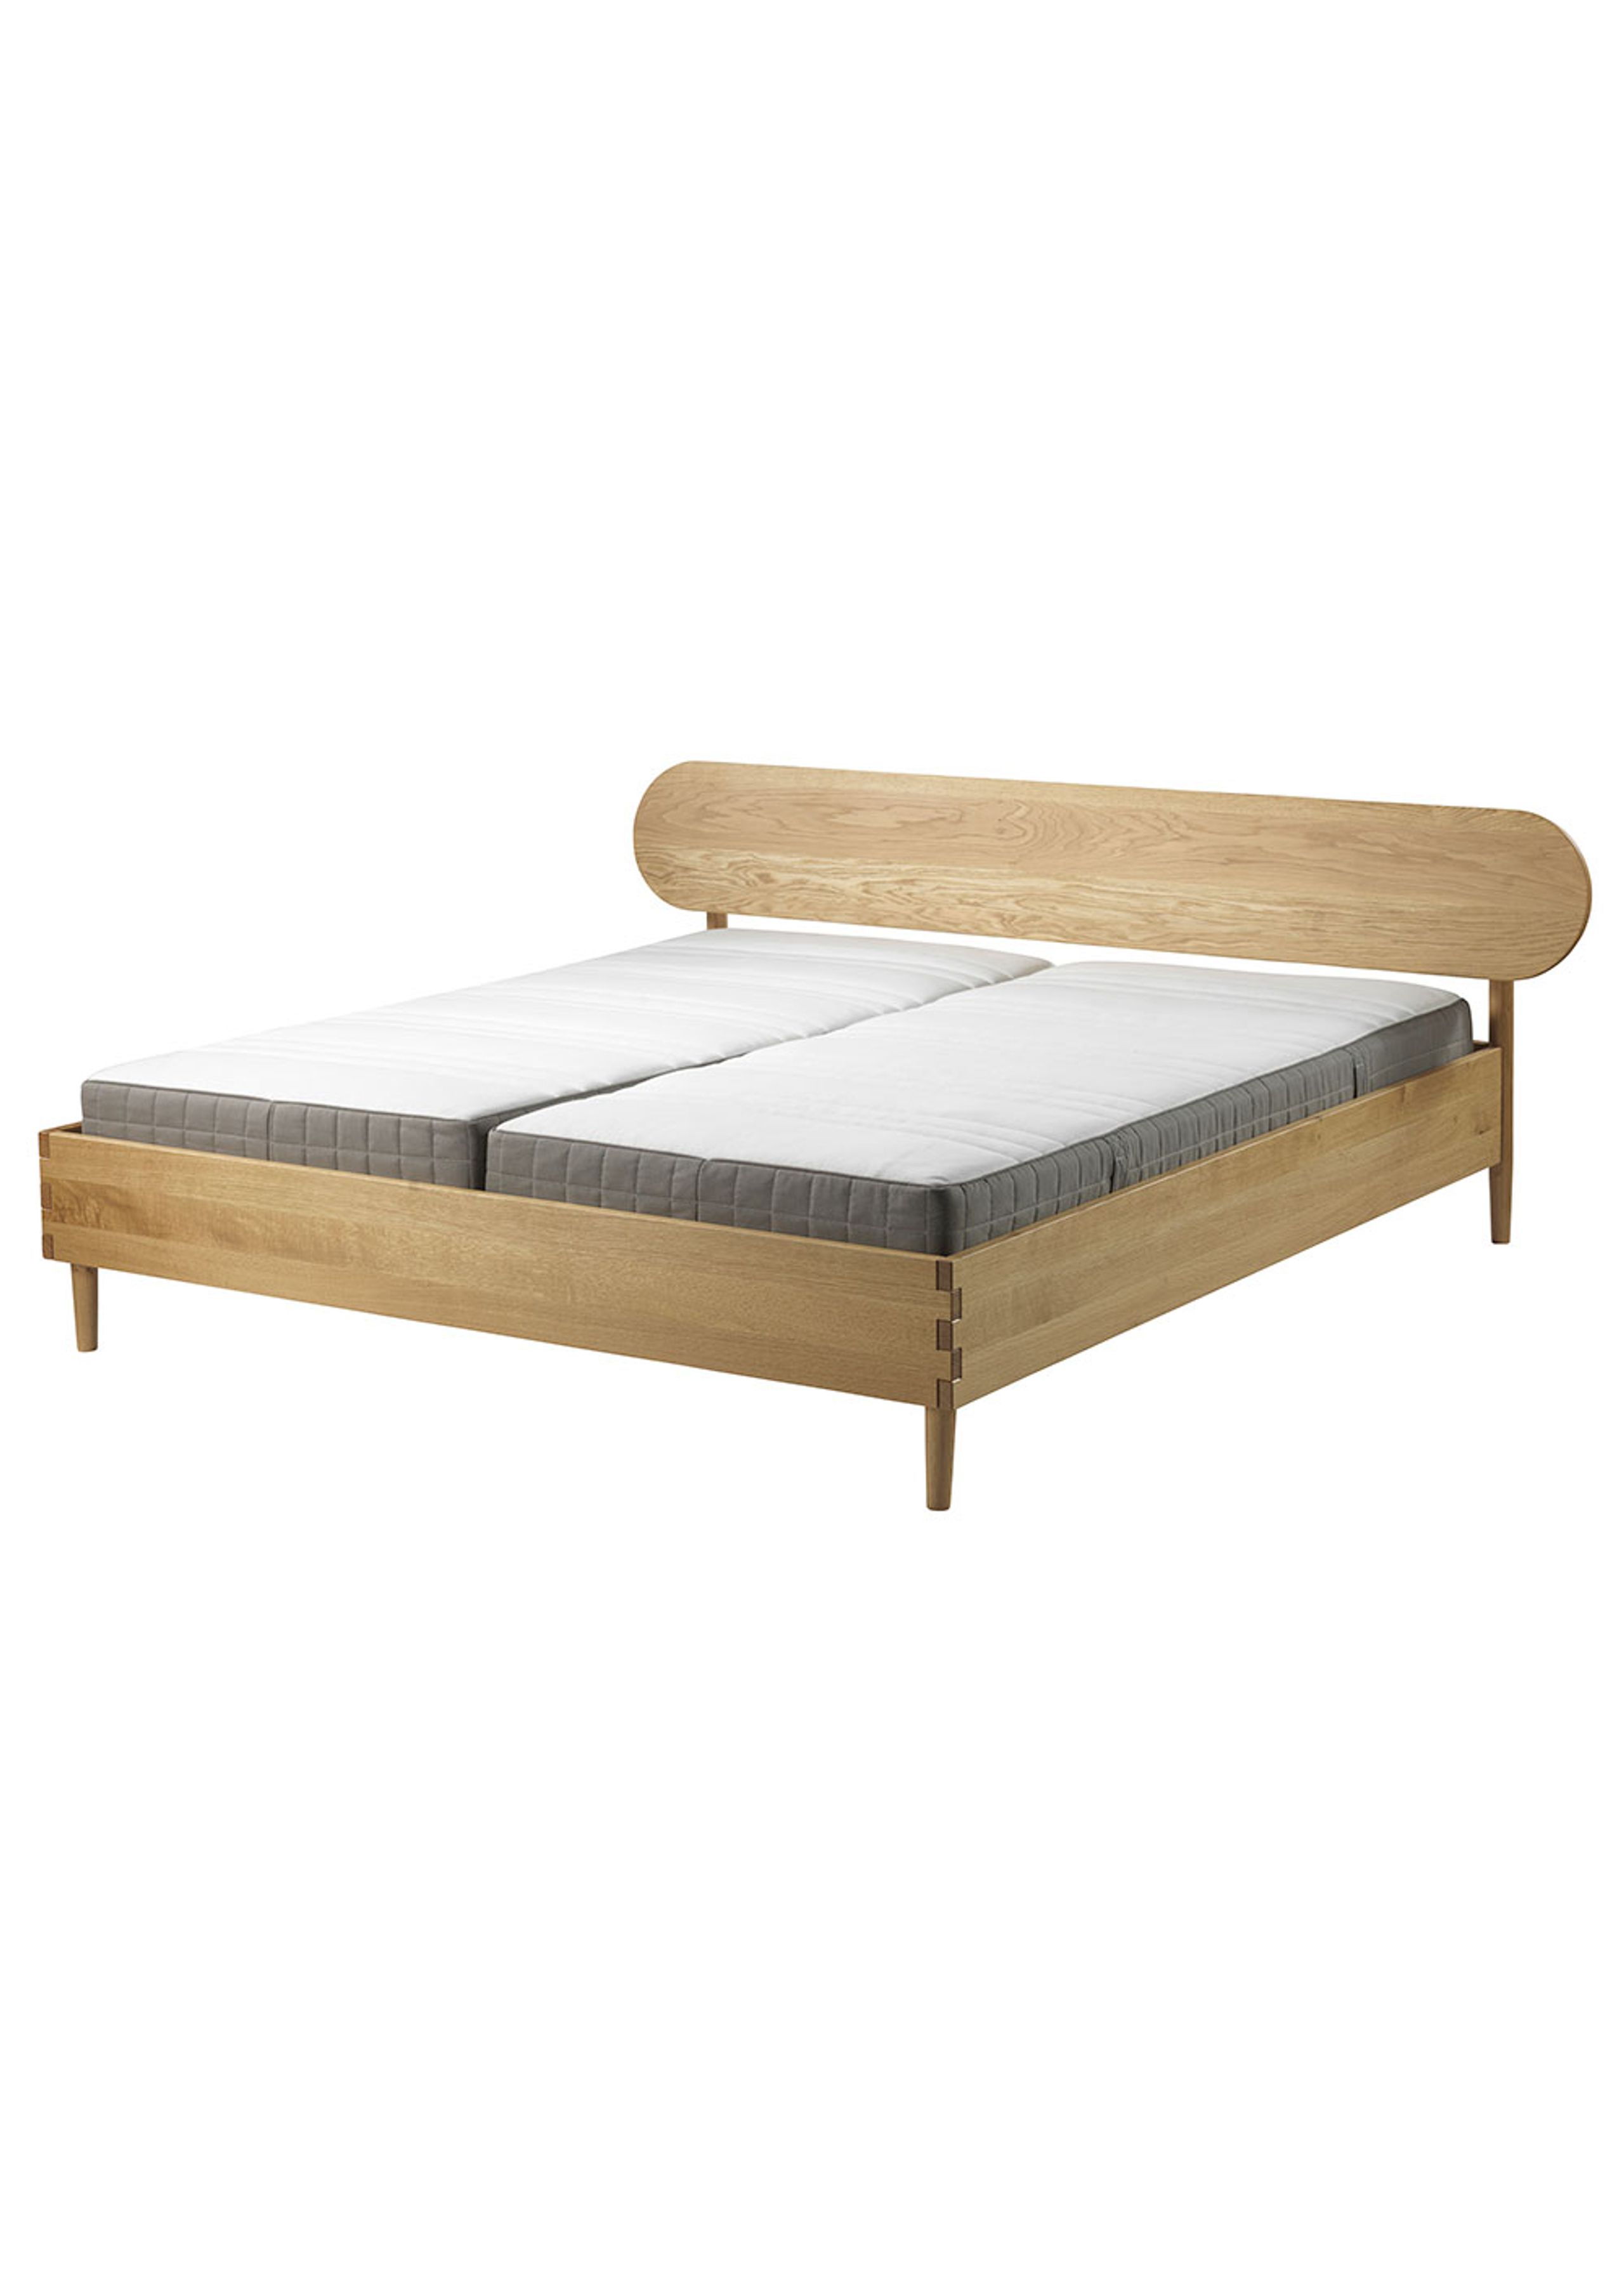 FDB Møbler / Furniture - Bed frame - G30 - Radius - Seng - Oak, Nature